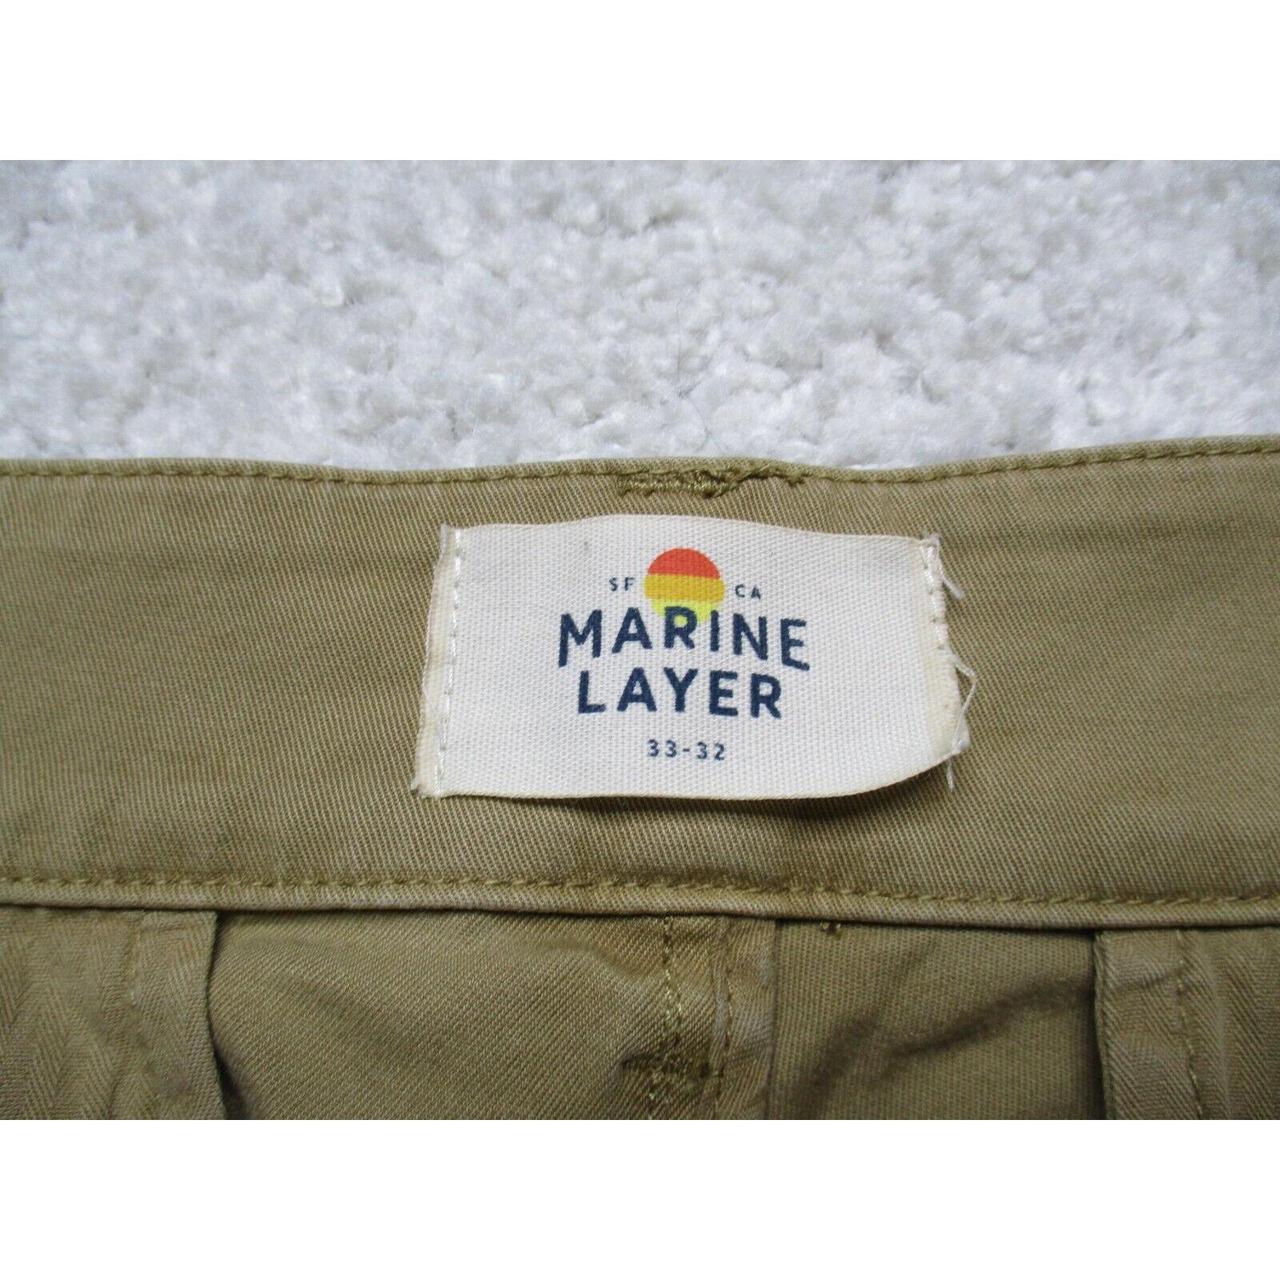 Product Image 2 - Marine Layer Pants Mens 33